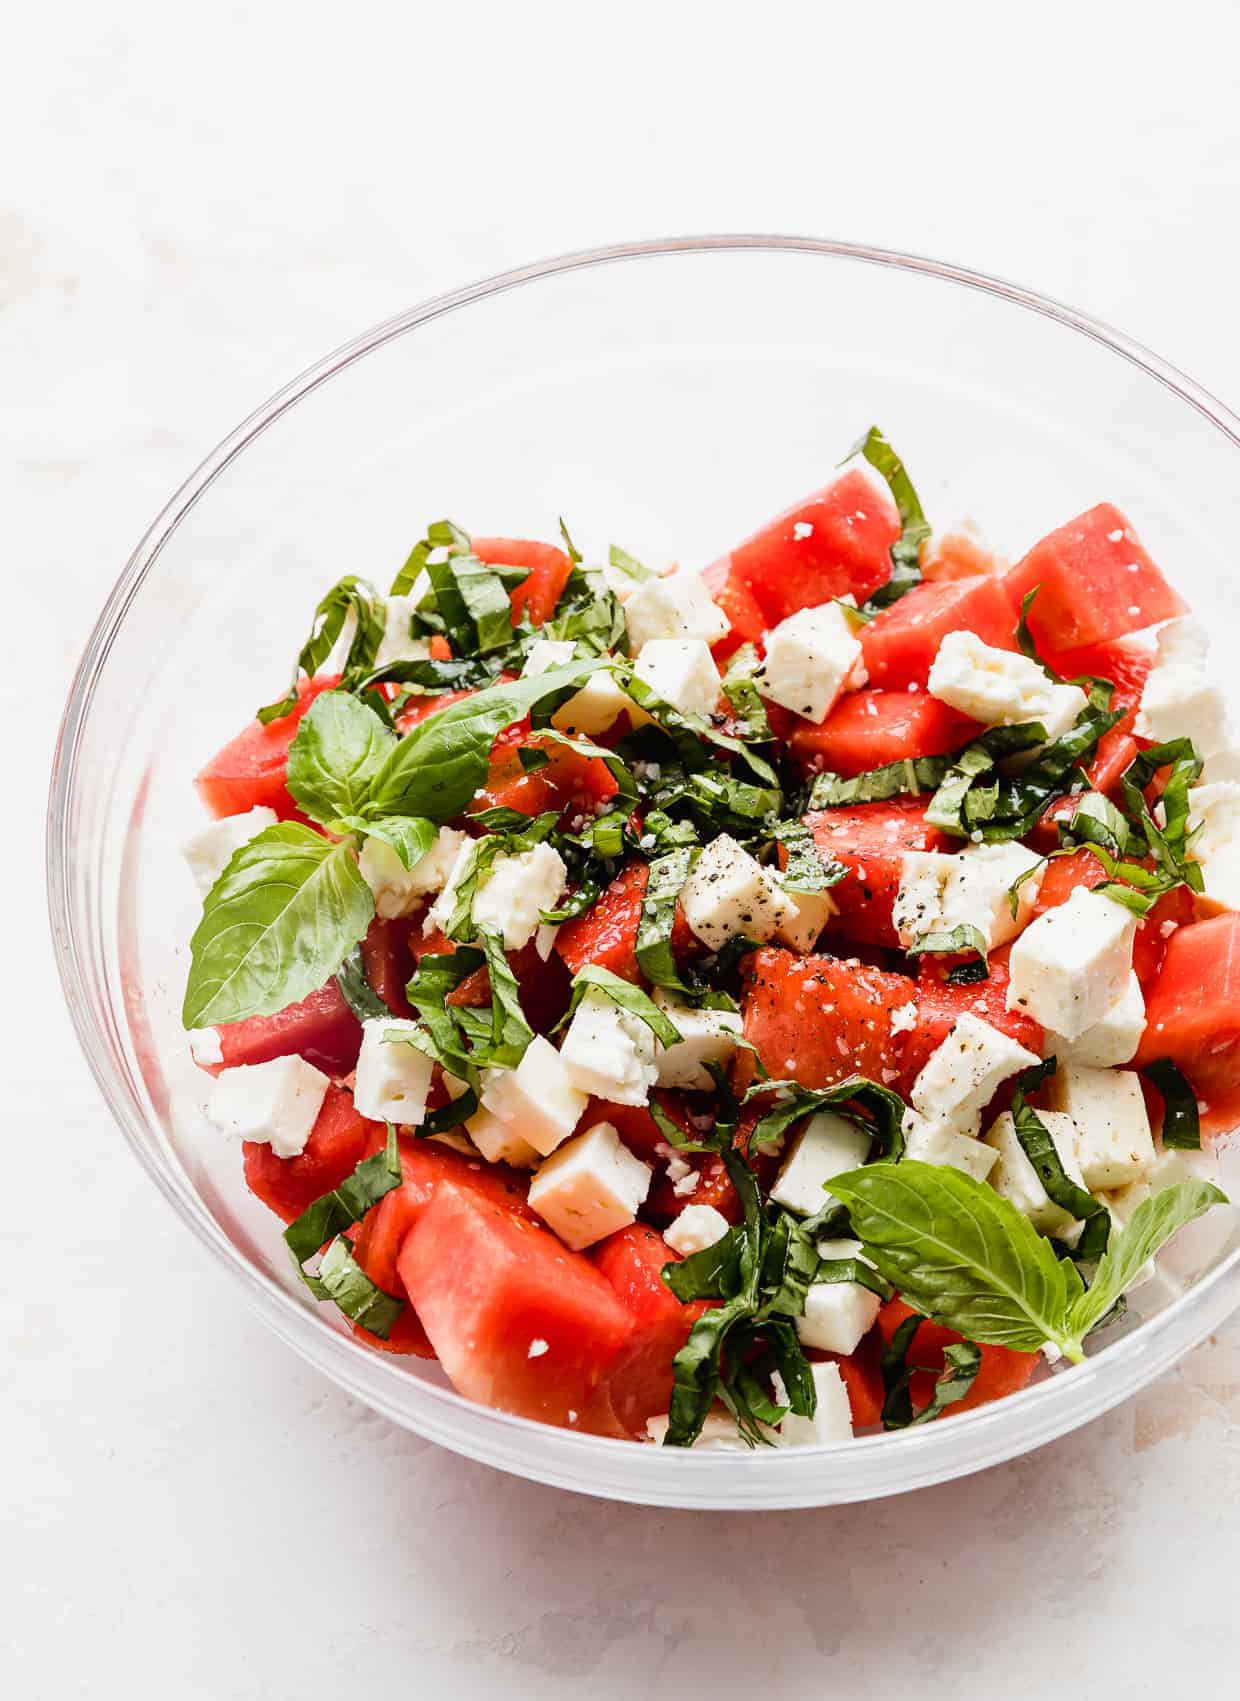 A Watermelon Feta Basil Salad in a glass bowl against a white background.